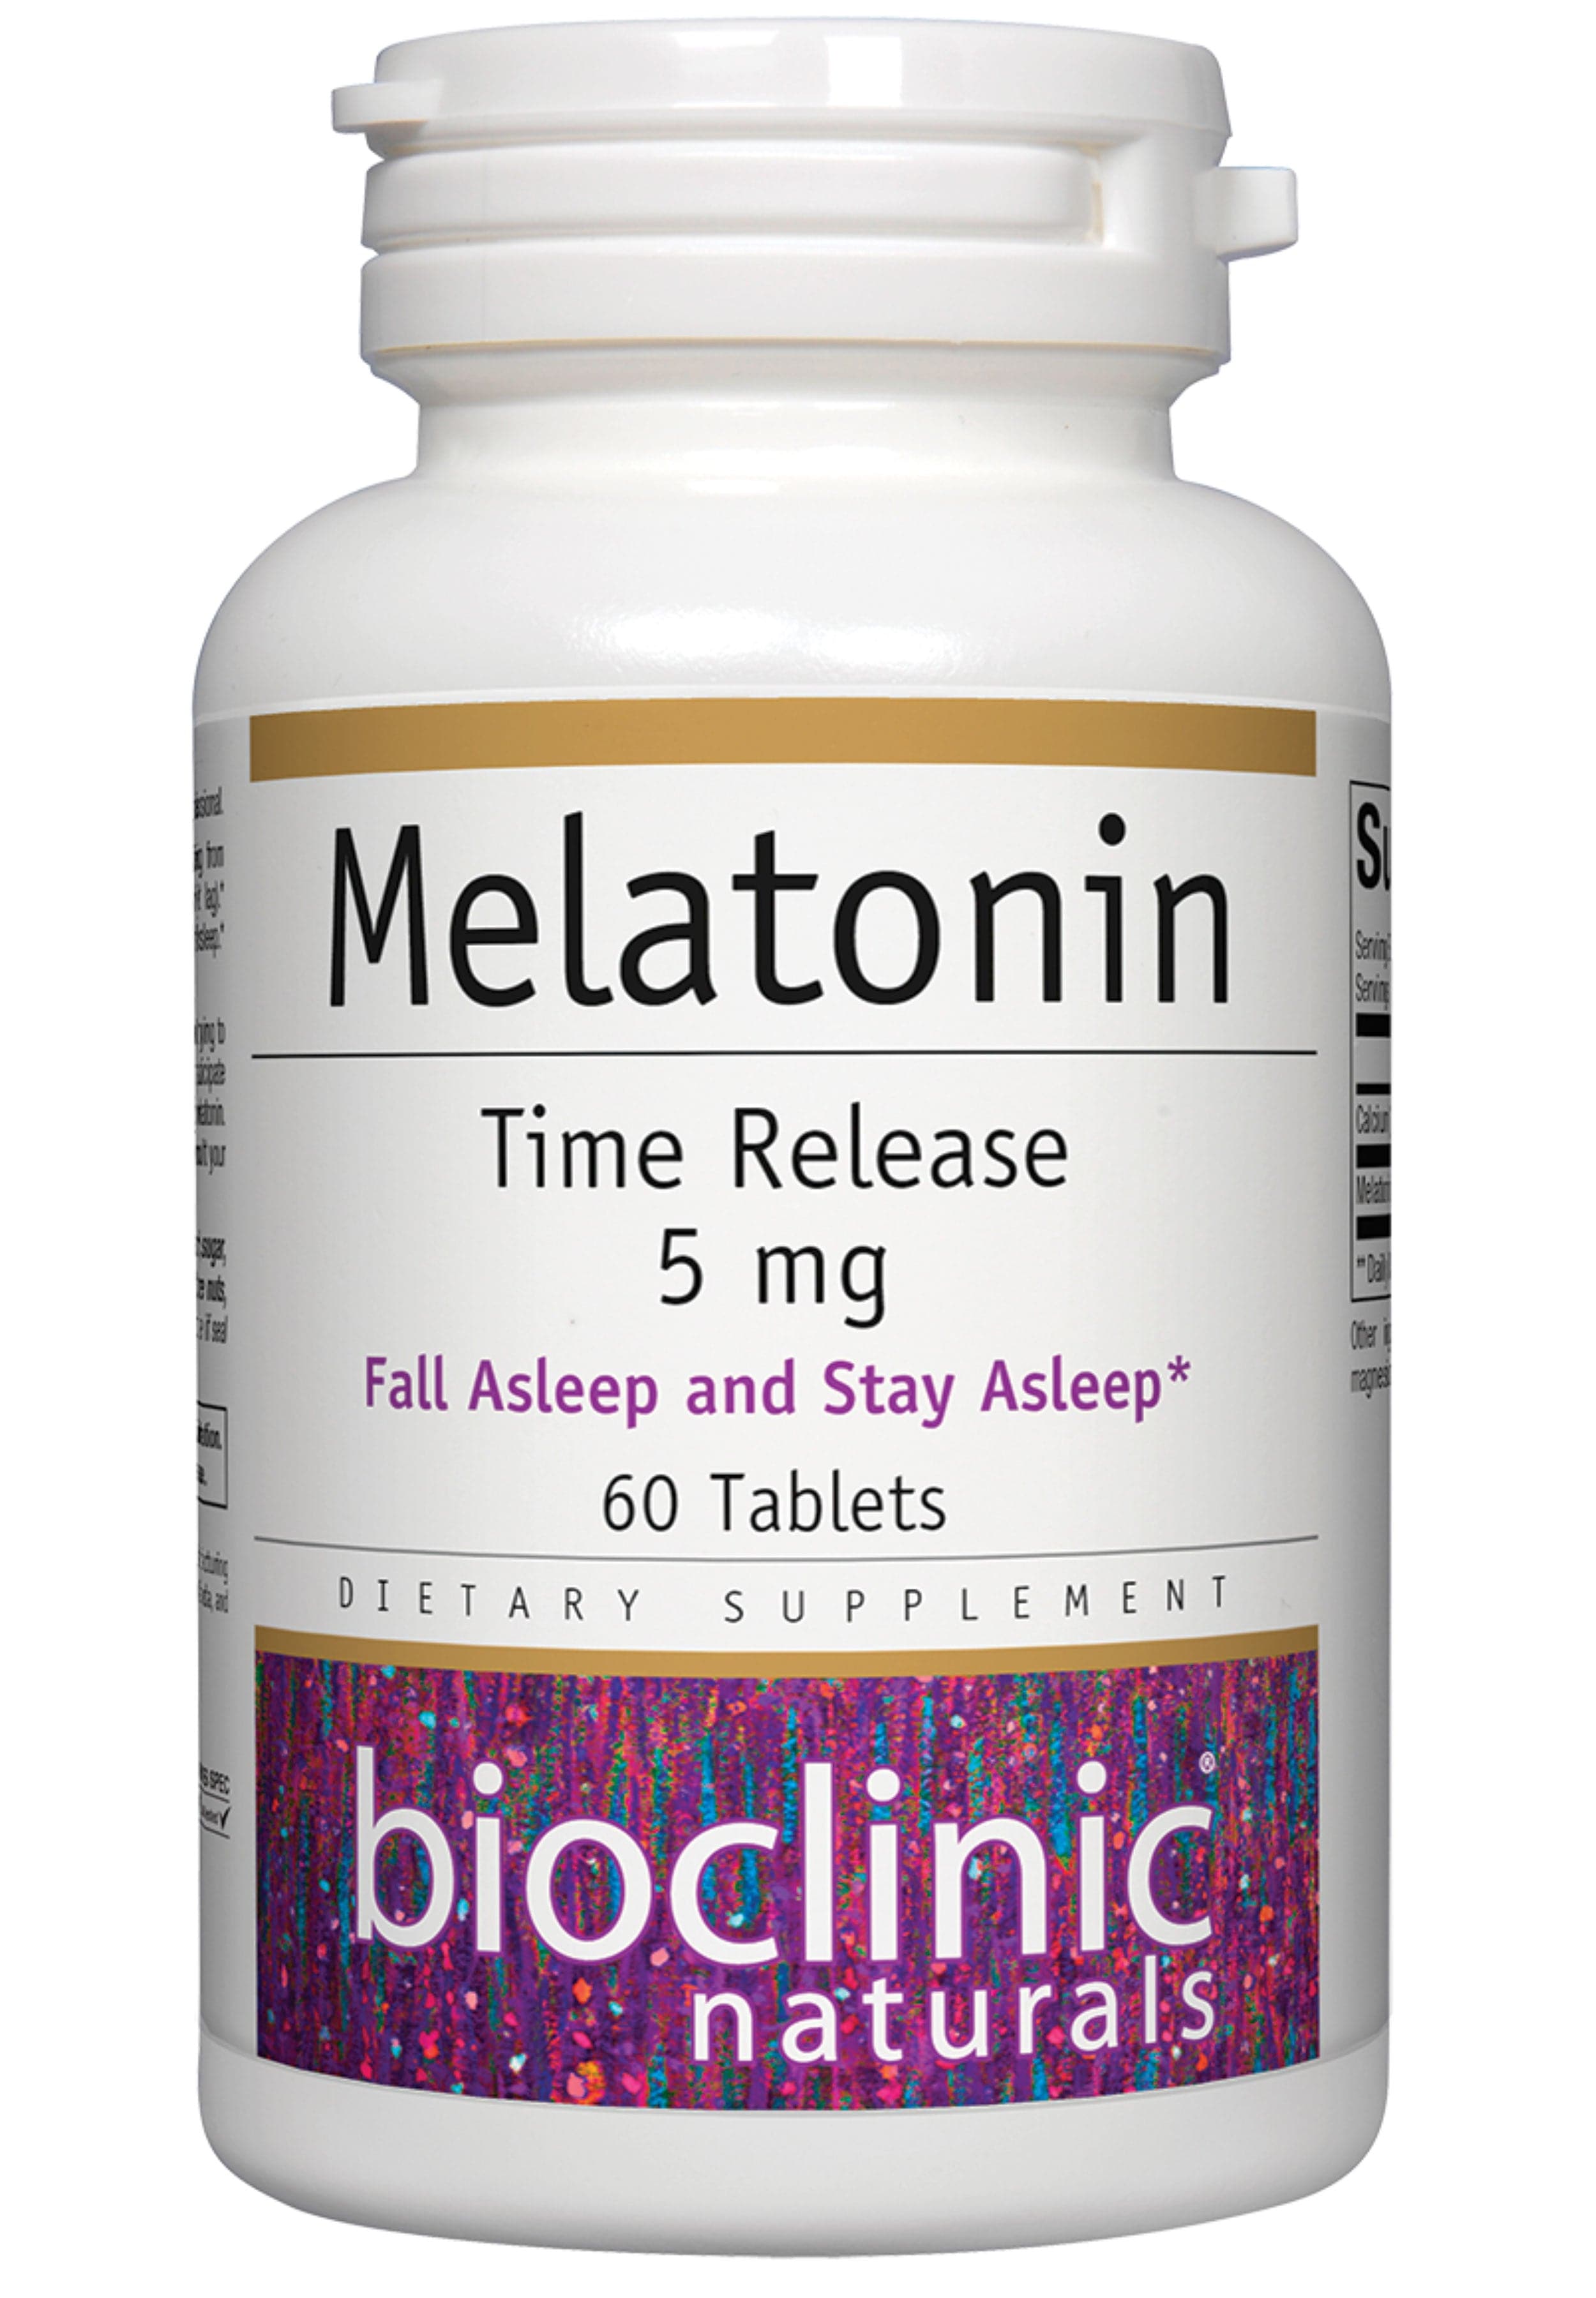 Bioclinic Naturals Melatonin Time Release 5mg